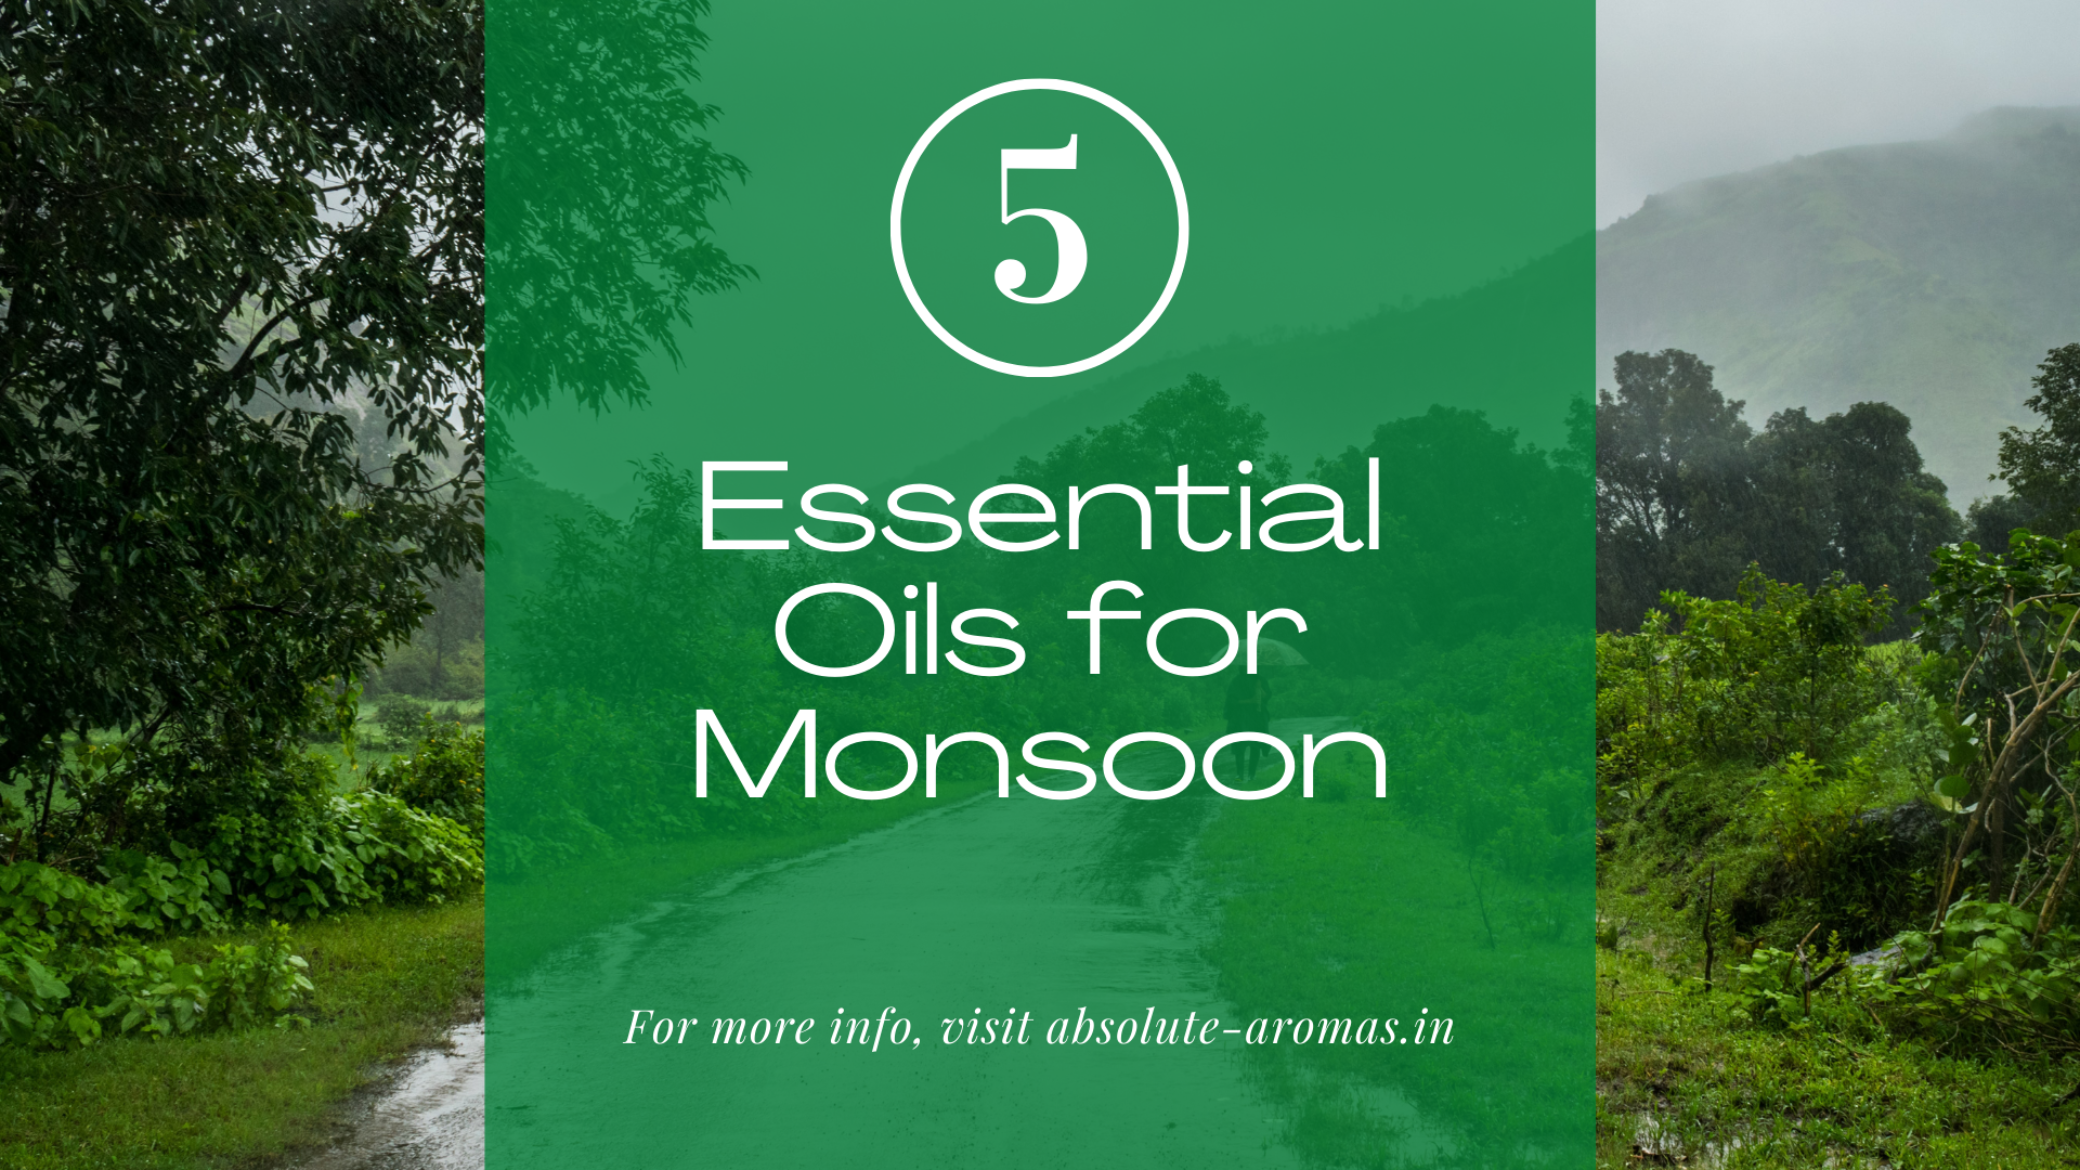 ESSENTIAL OILS FOR MONSOON SEASON